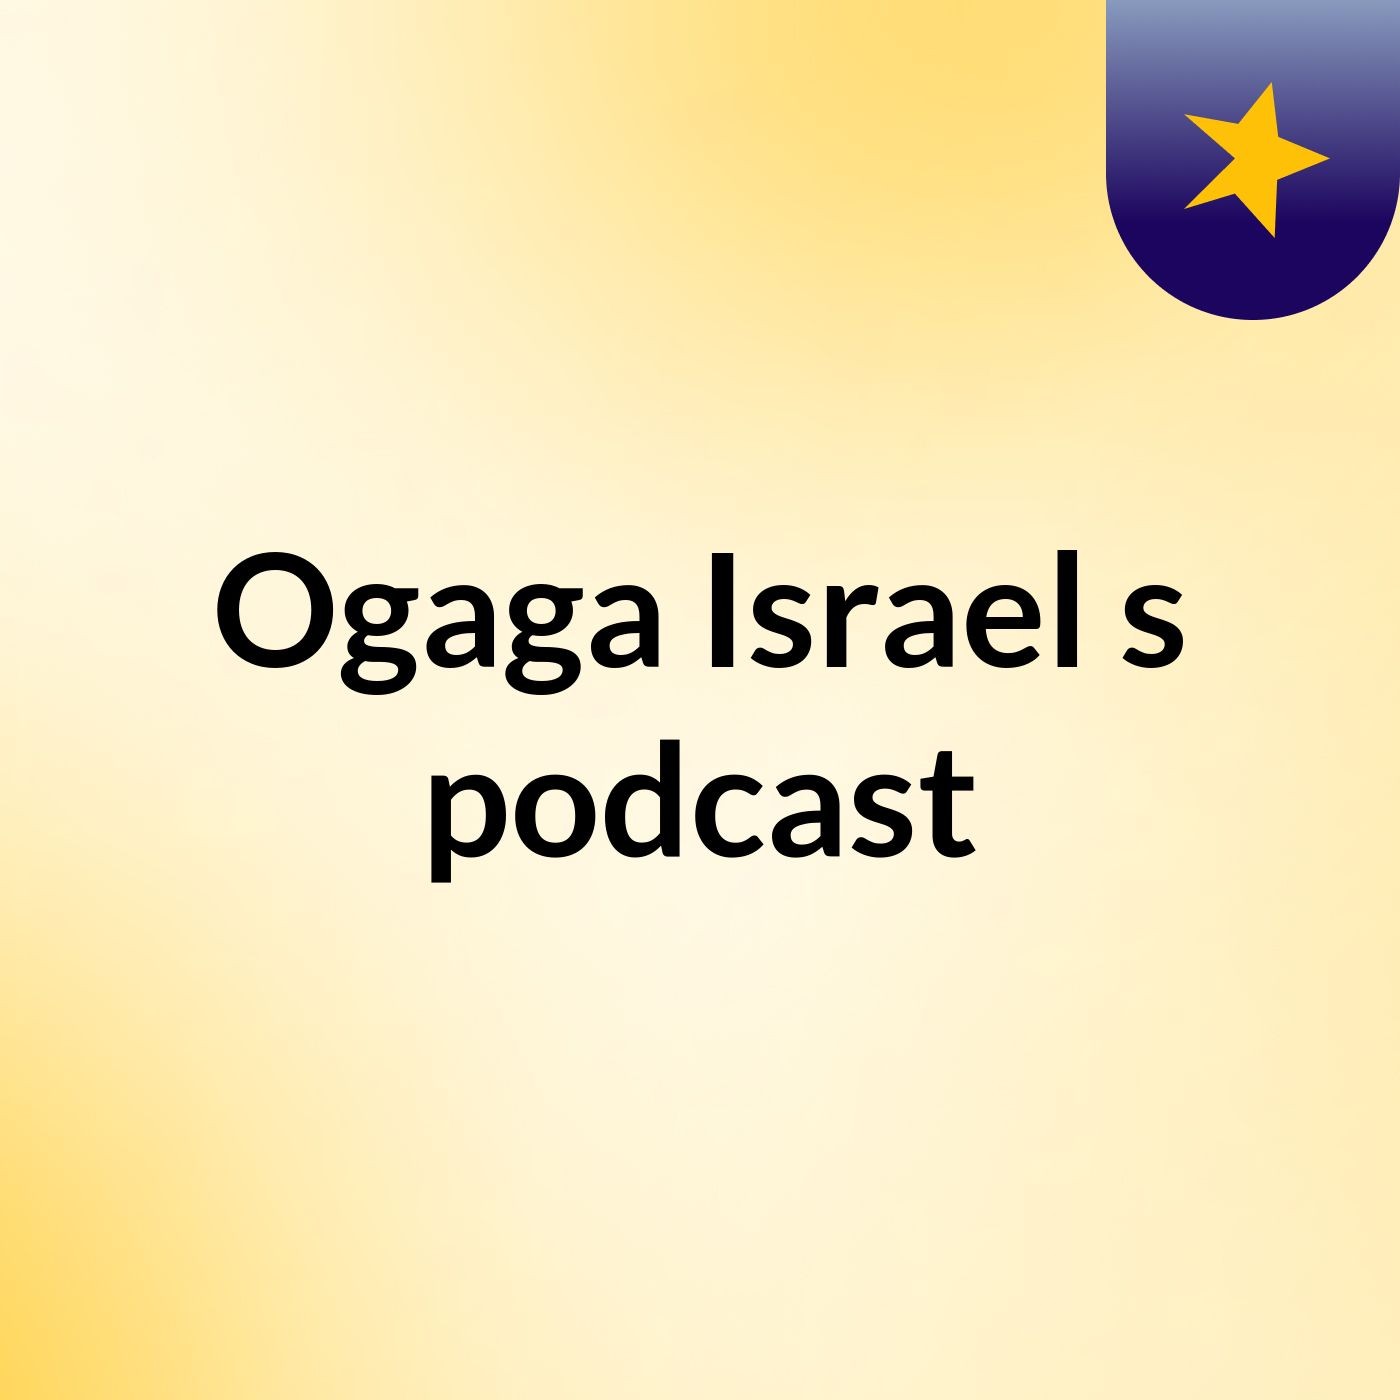 Ogaga Israel's podcast